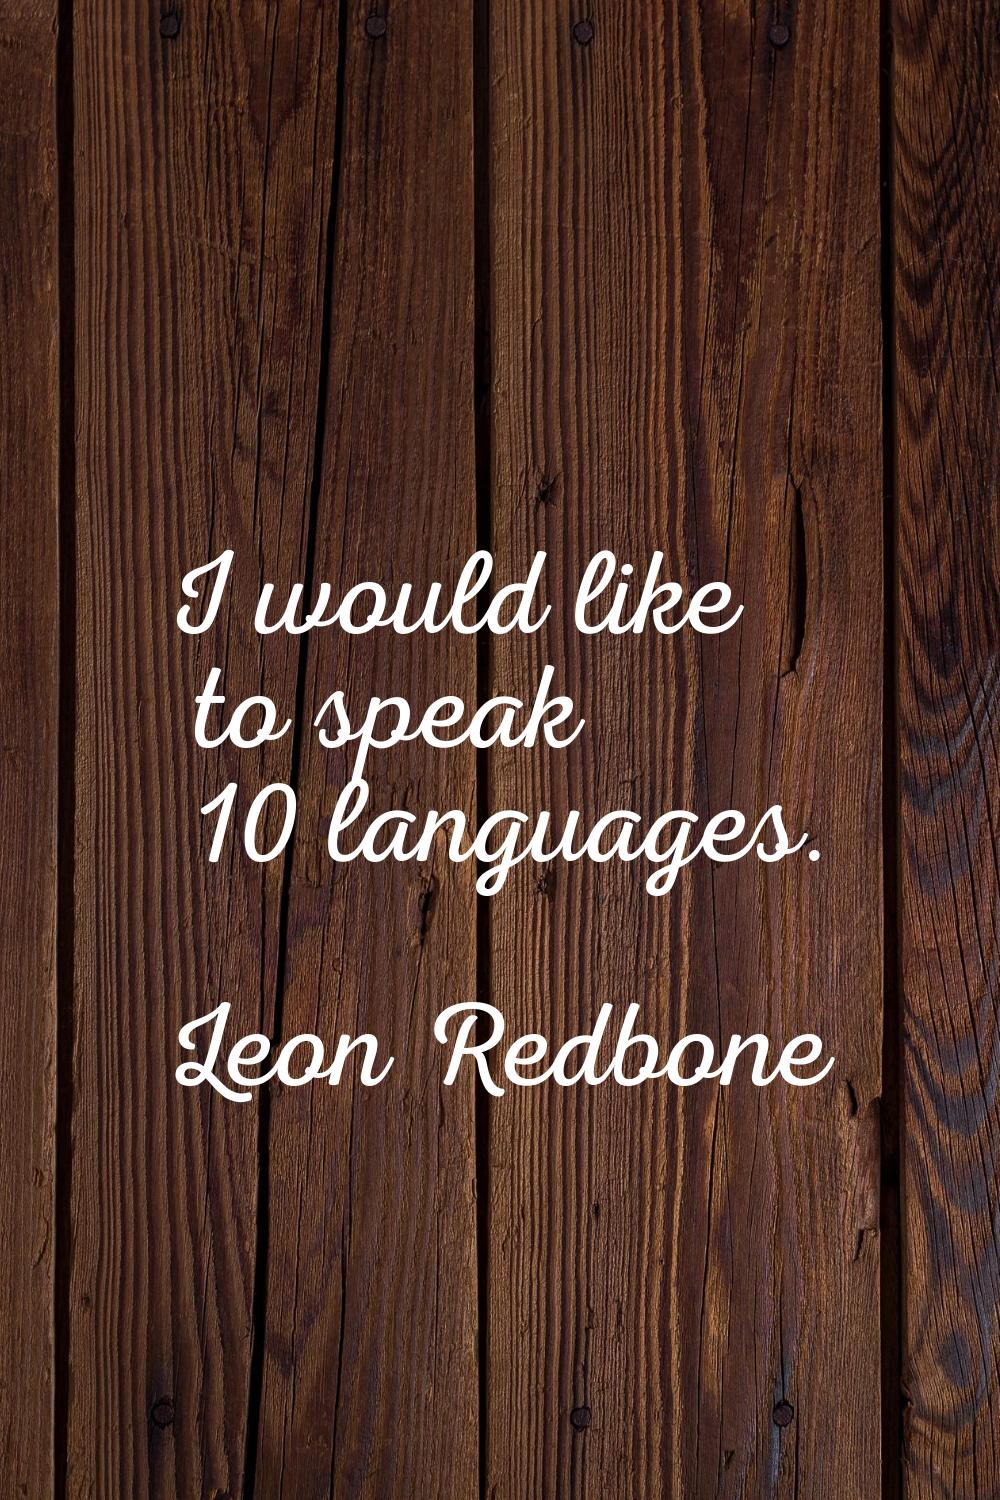 I would like to speak 10 languages.